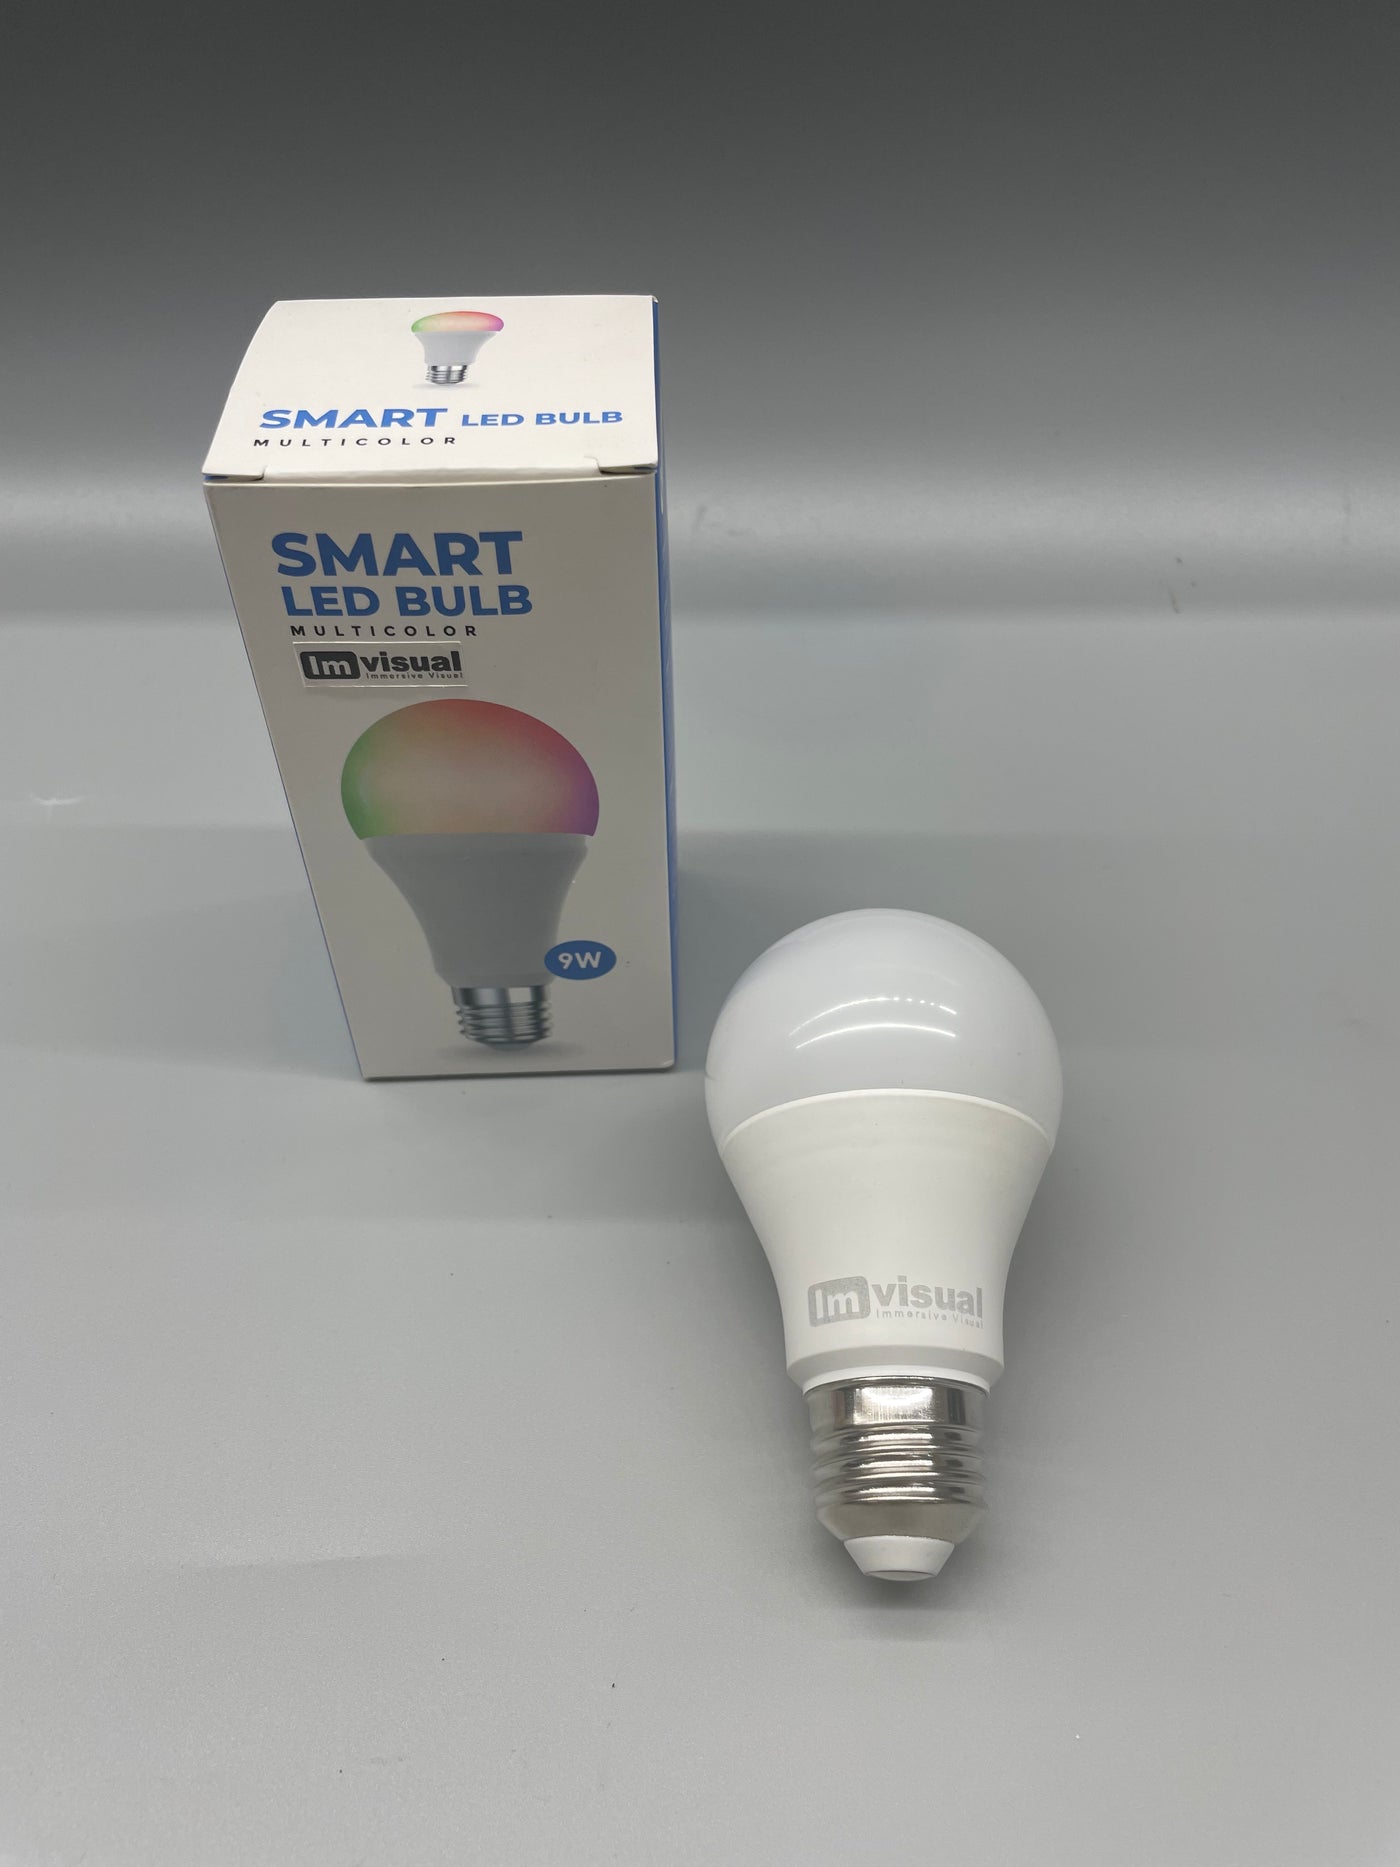 Imvisual Smart Light Bulbs, Wi-Fi & Bluetooth Color Changing Light Bulbs, Music Sync, 16 Million DIY Colors RGBWW Color Lights Bulb, Work with Alexa, Google Assistant